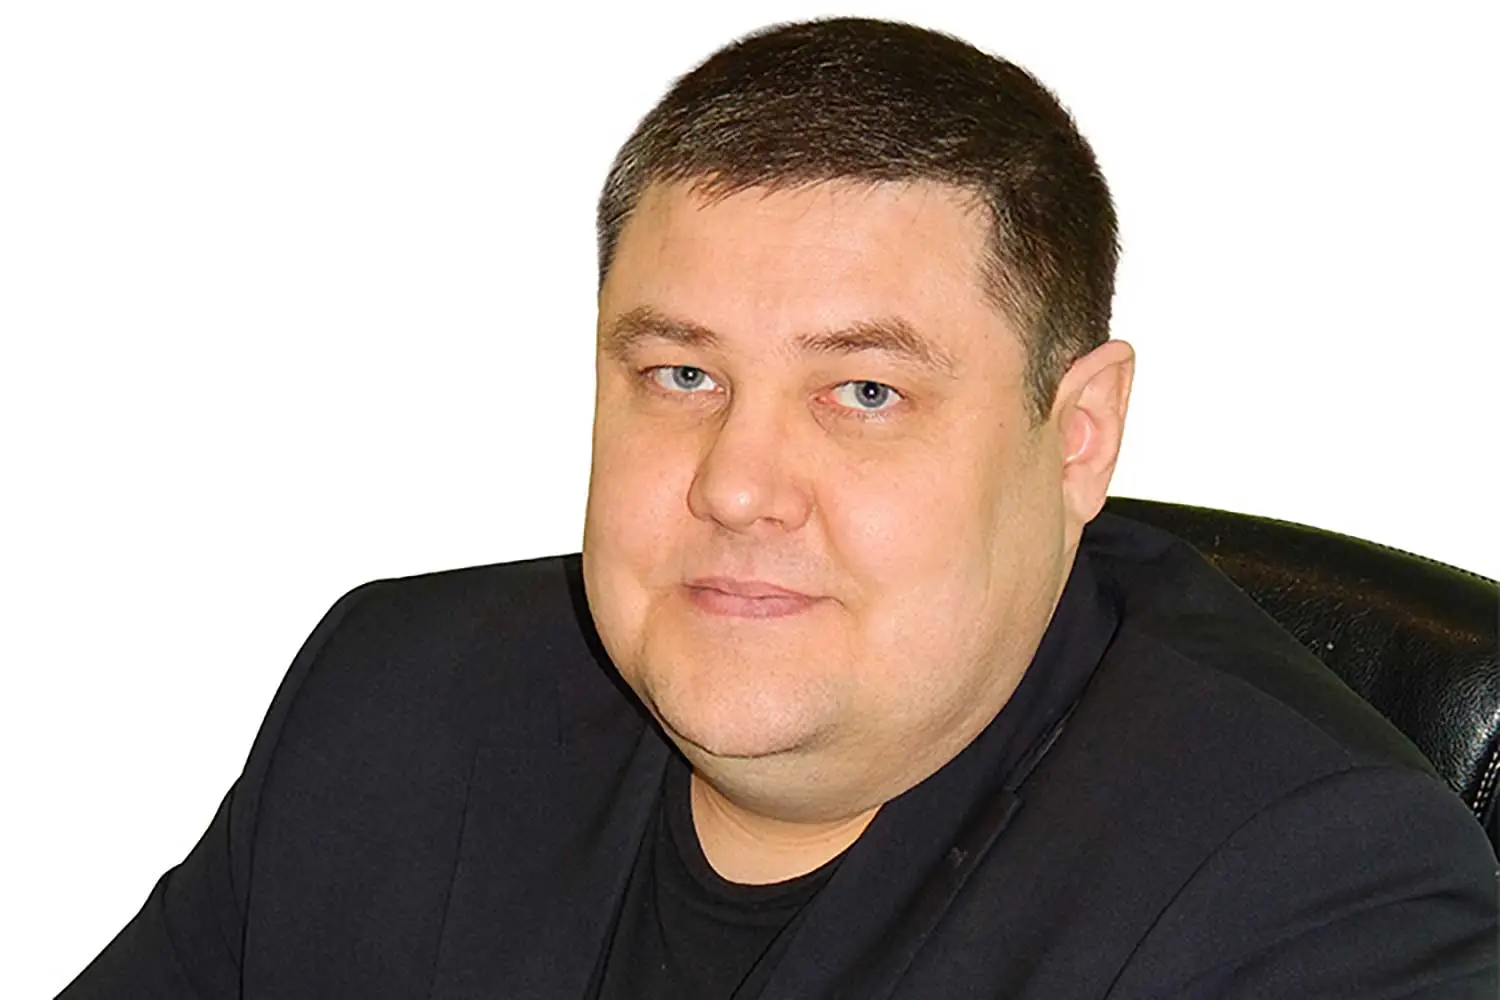 Siberian editor Dmitry Popkov was shot dead in May 2017, ending a three year lull of targeted journalist killings in Russia. (Yulia Mullabayeva/Ton-M)